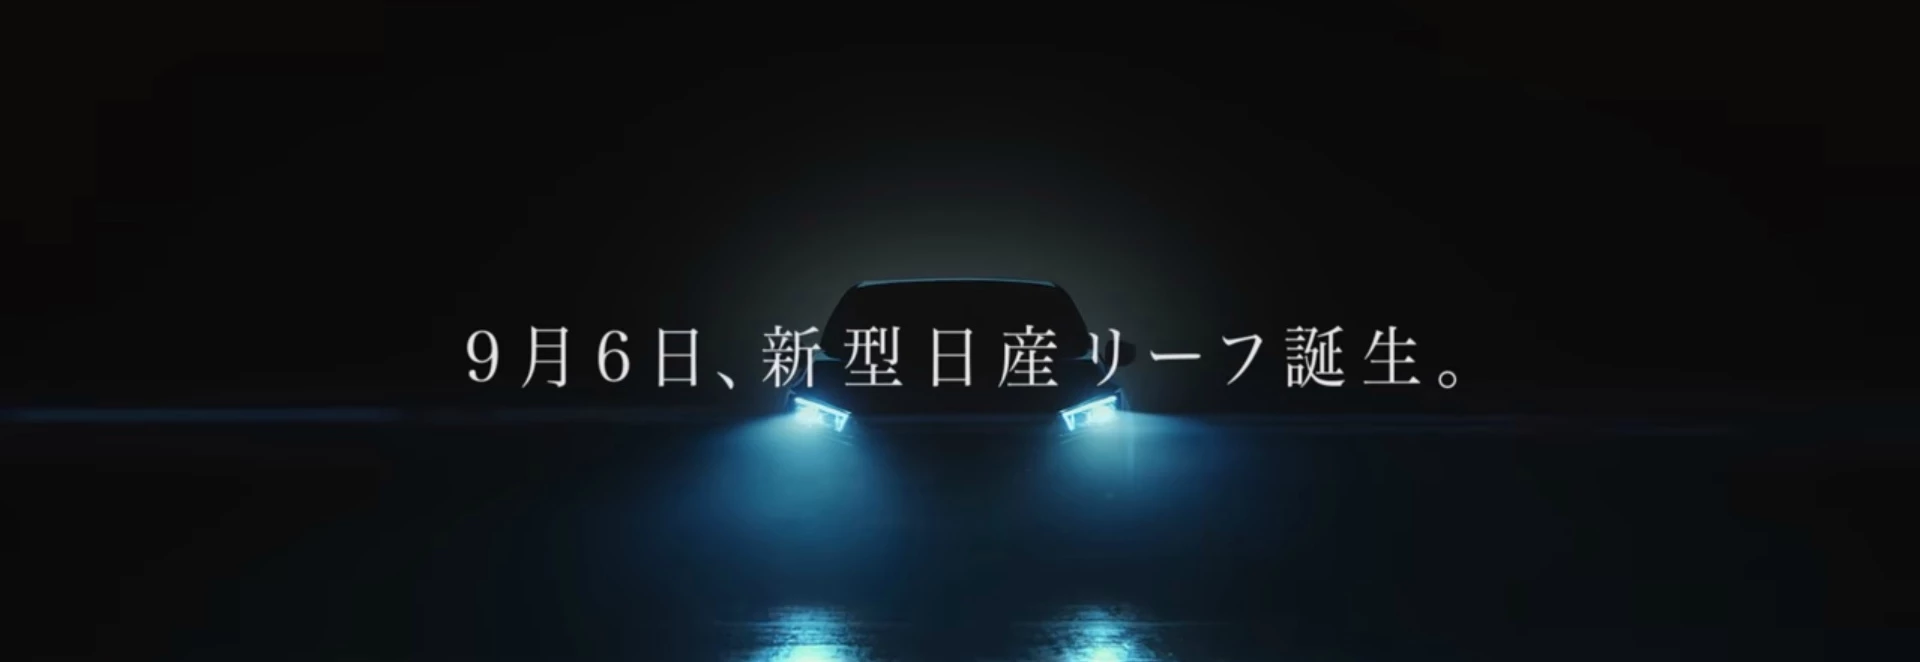 2018 Nissan LEAF appears in Japanese TV advert 